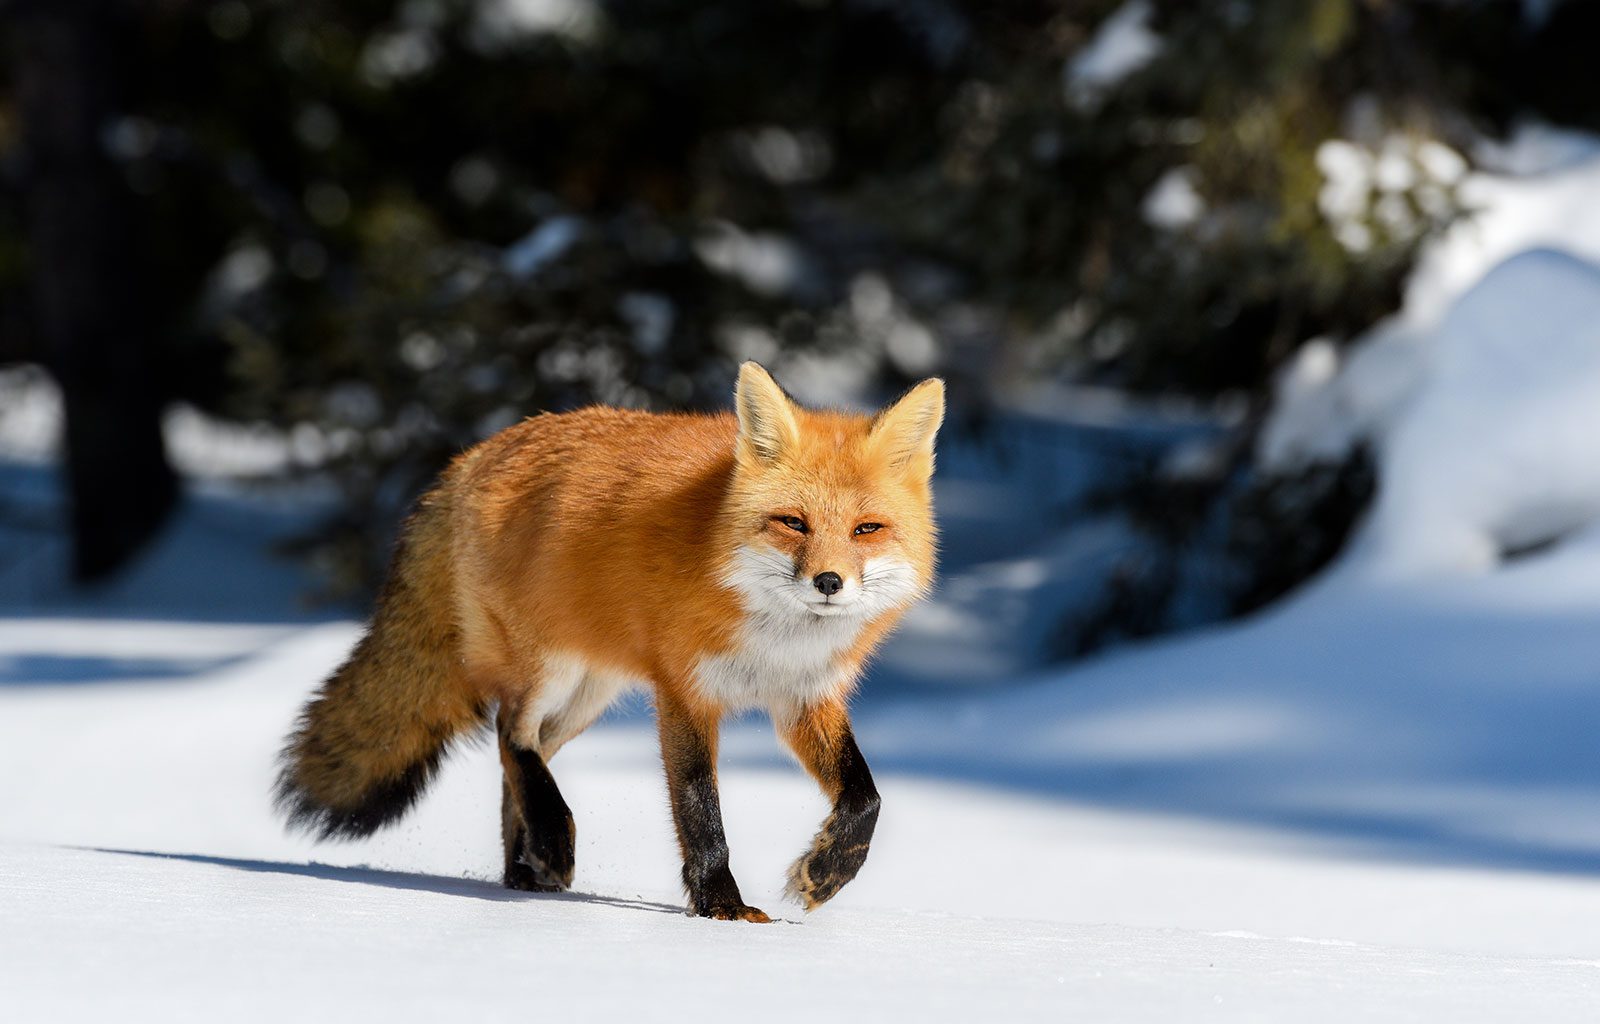 Fantastic Foxes: Their Secret World